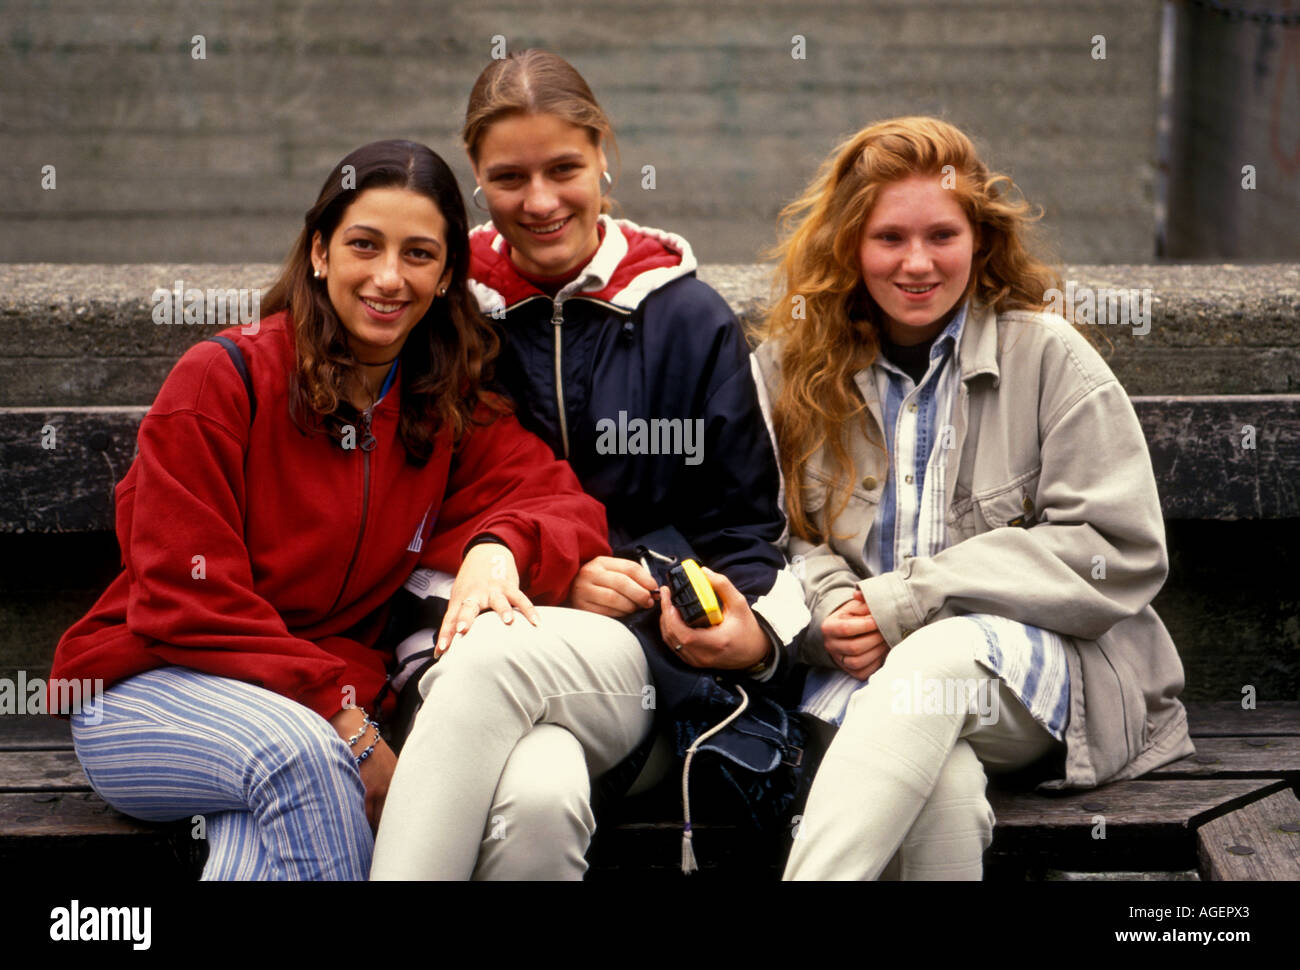 Three Teen Girls